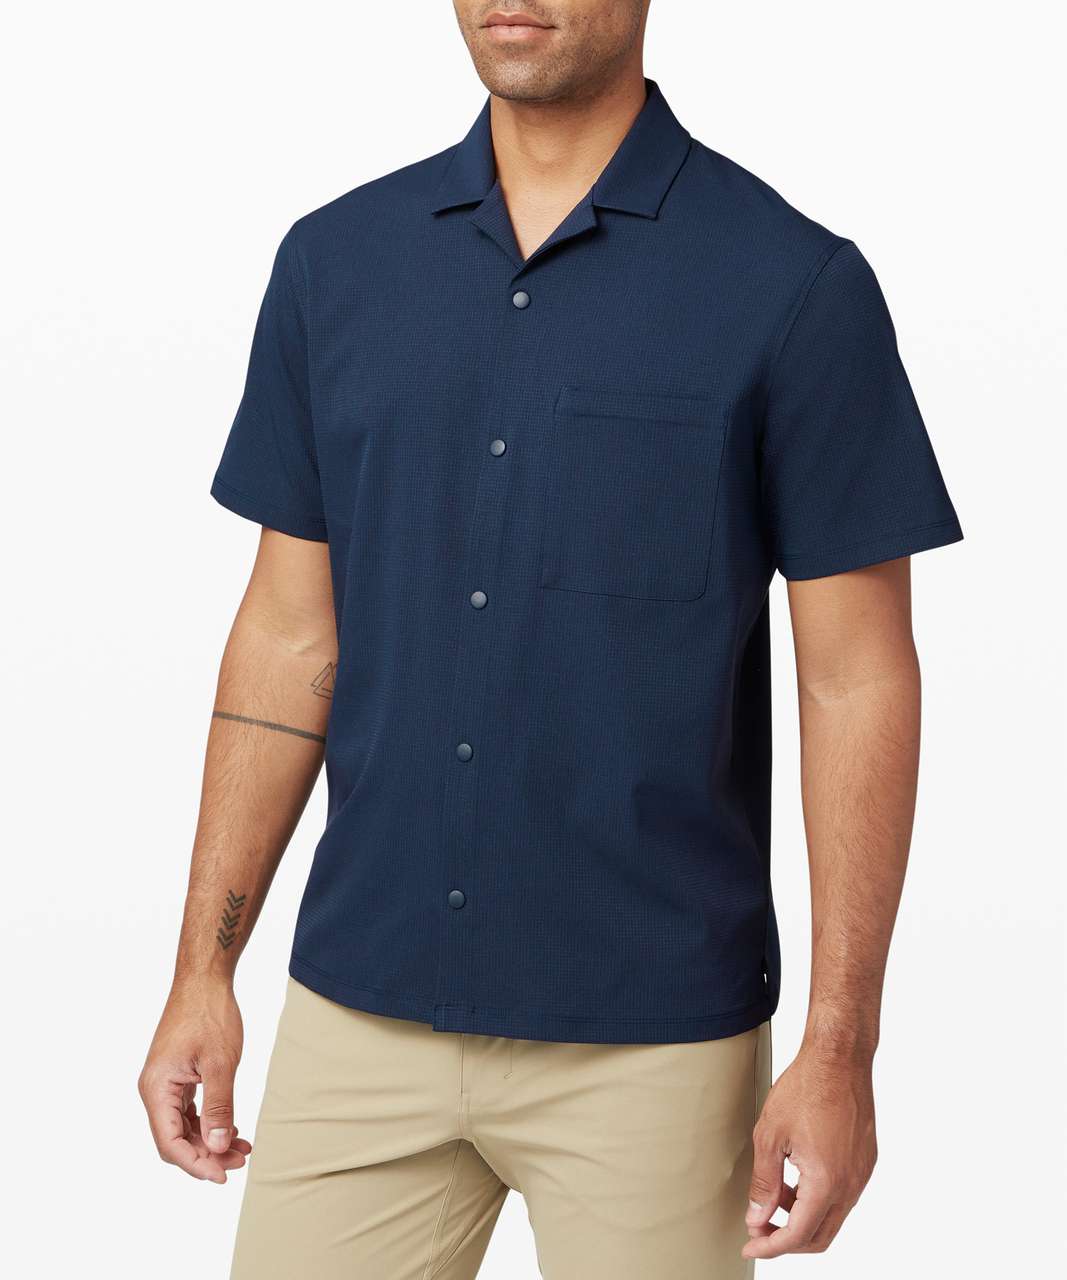 Upscale Mens Camp Shirt - Blue, Medium 